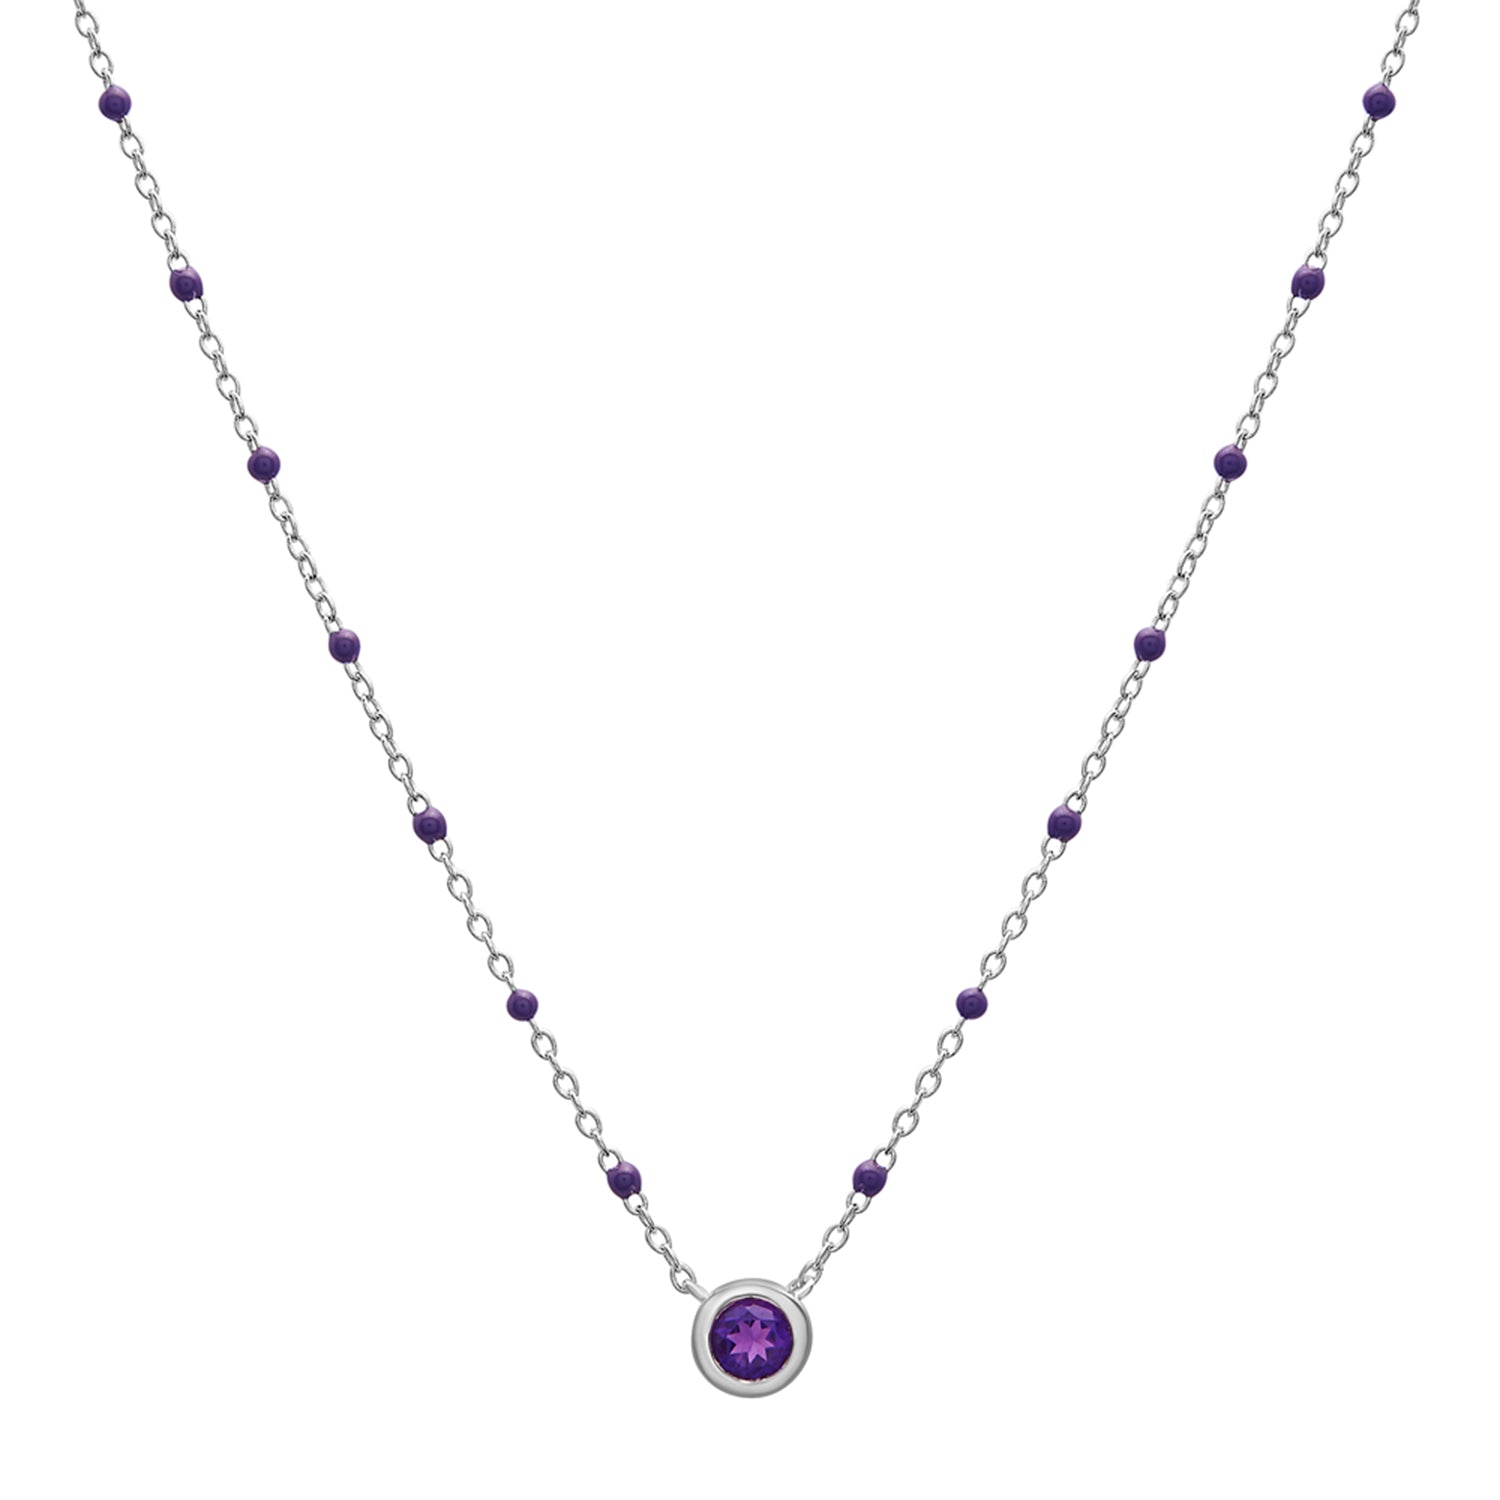 Birthstone Enamel Necklaces in Purple stone